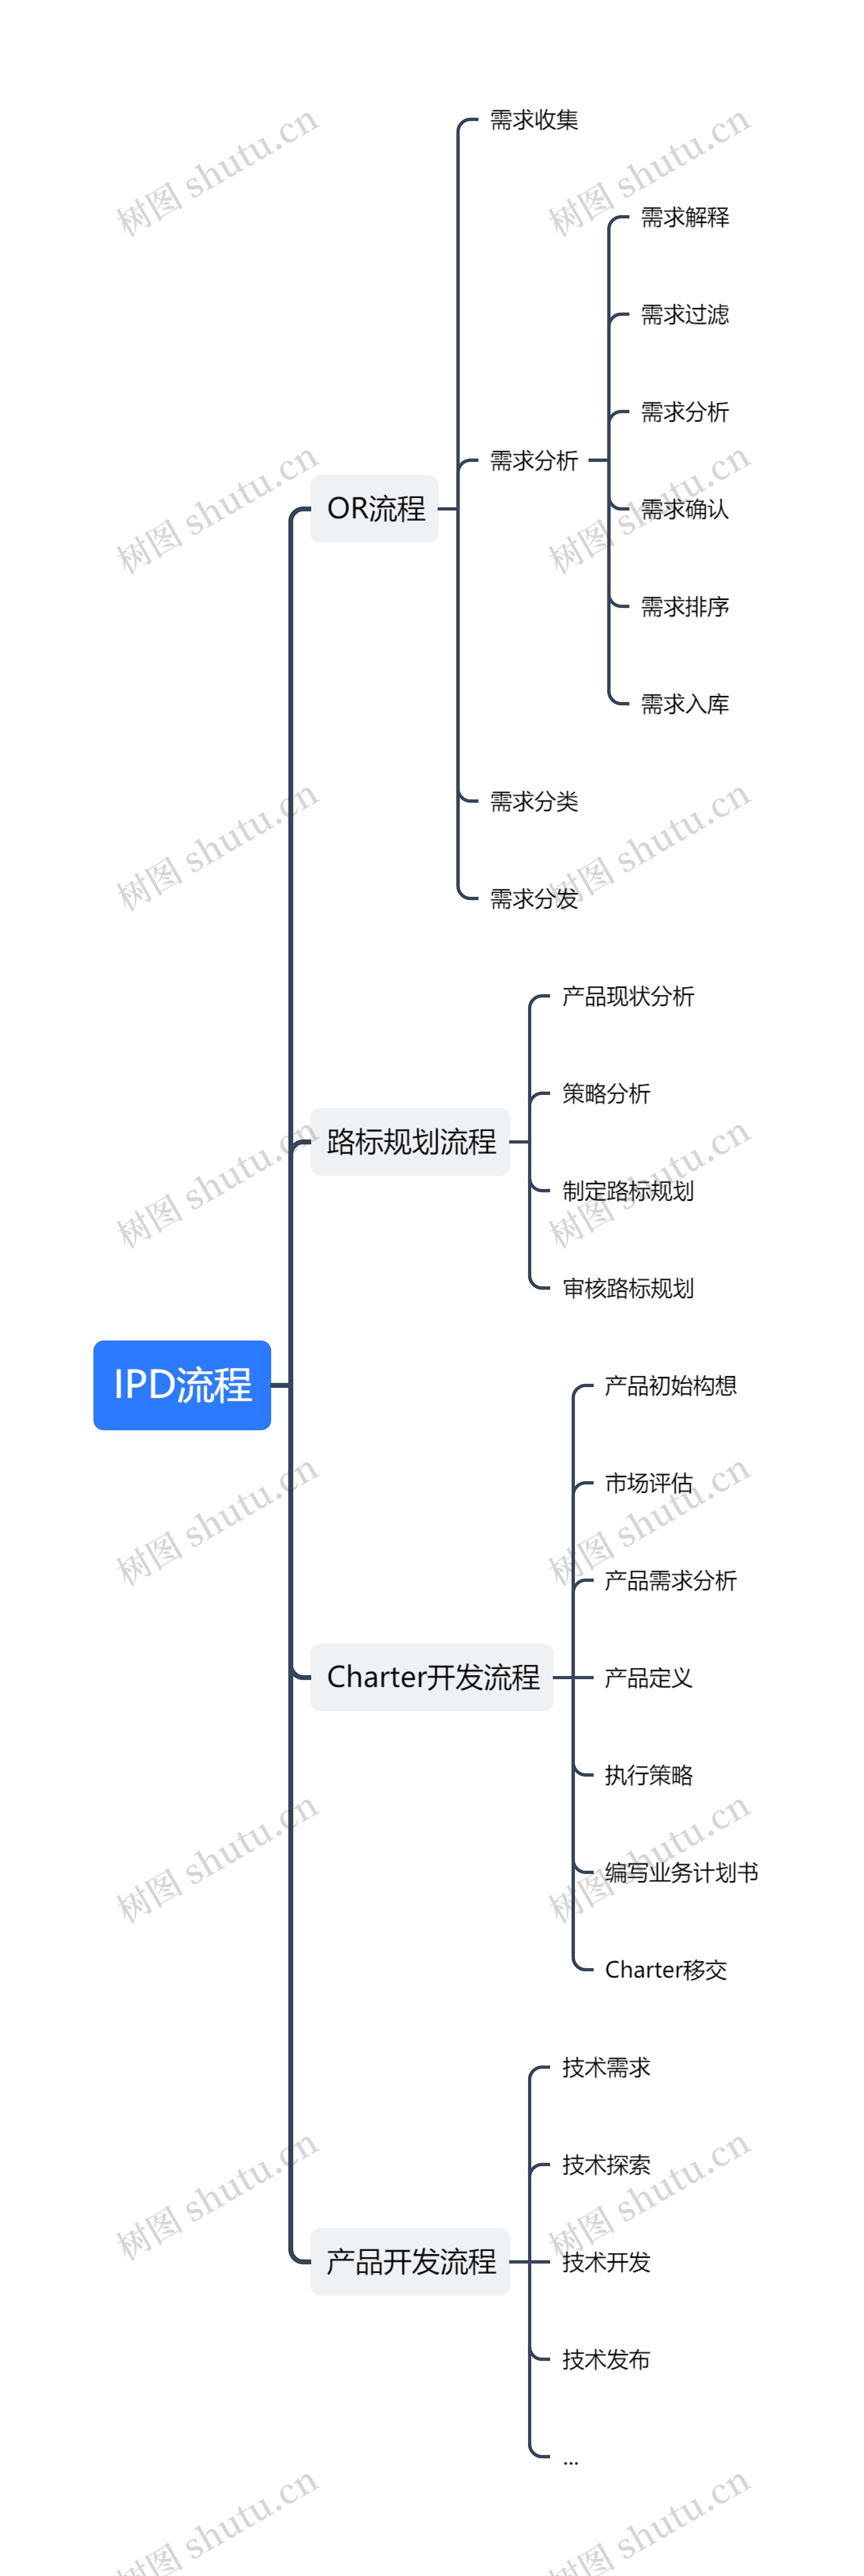 IPD流程思维导图